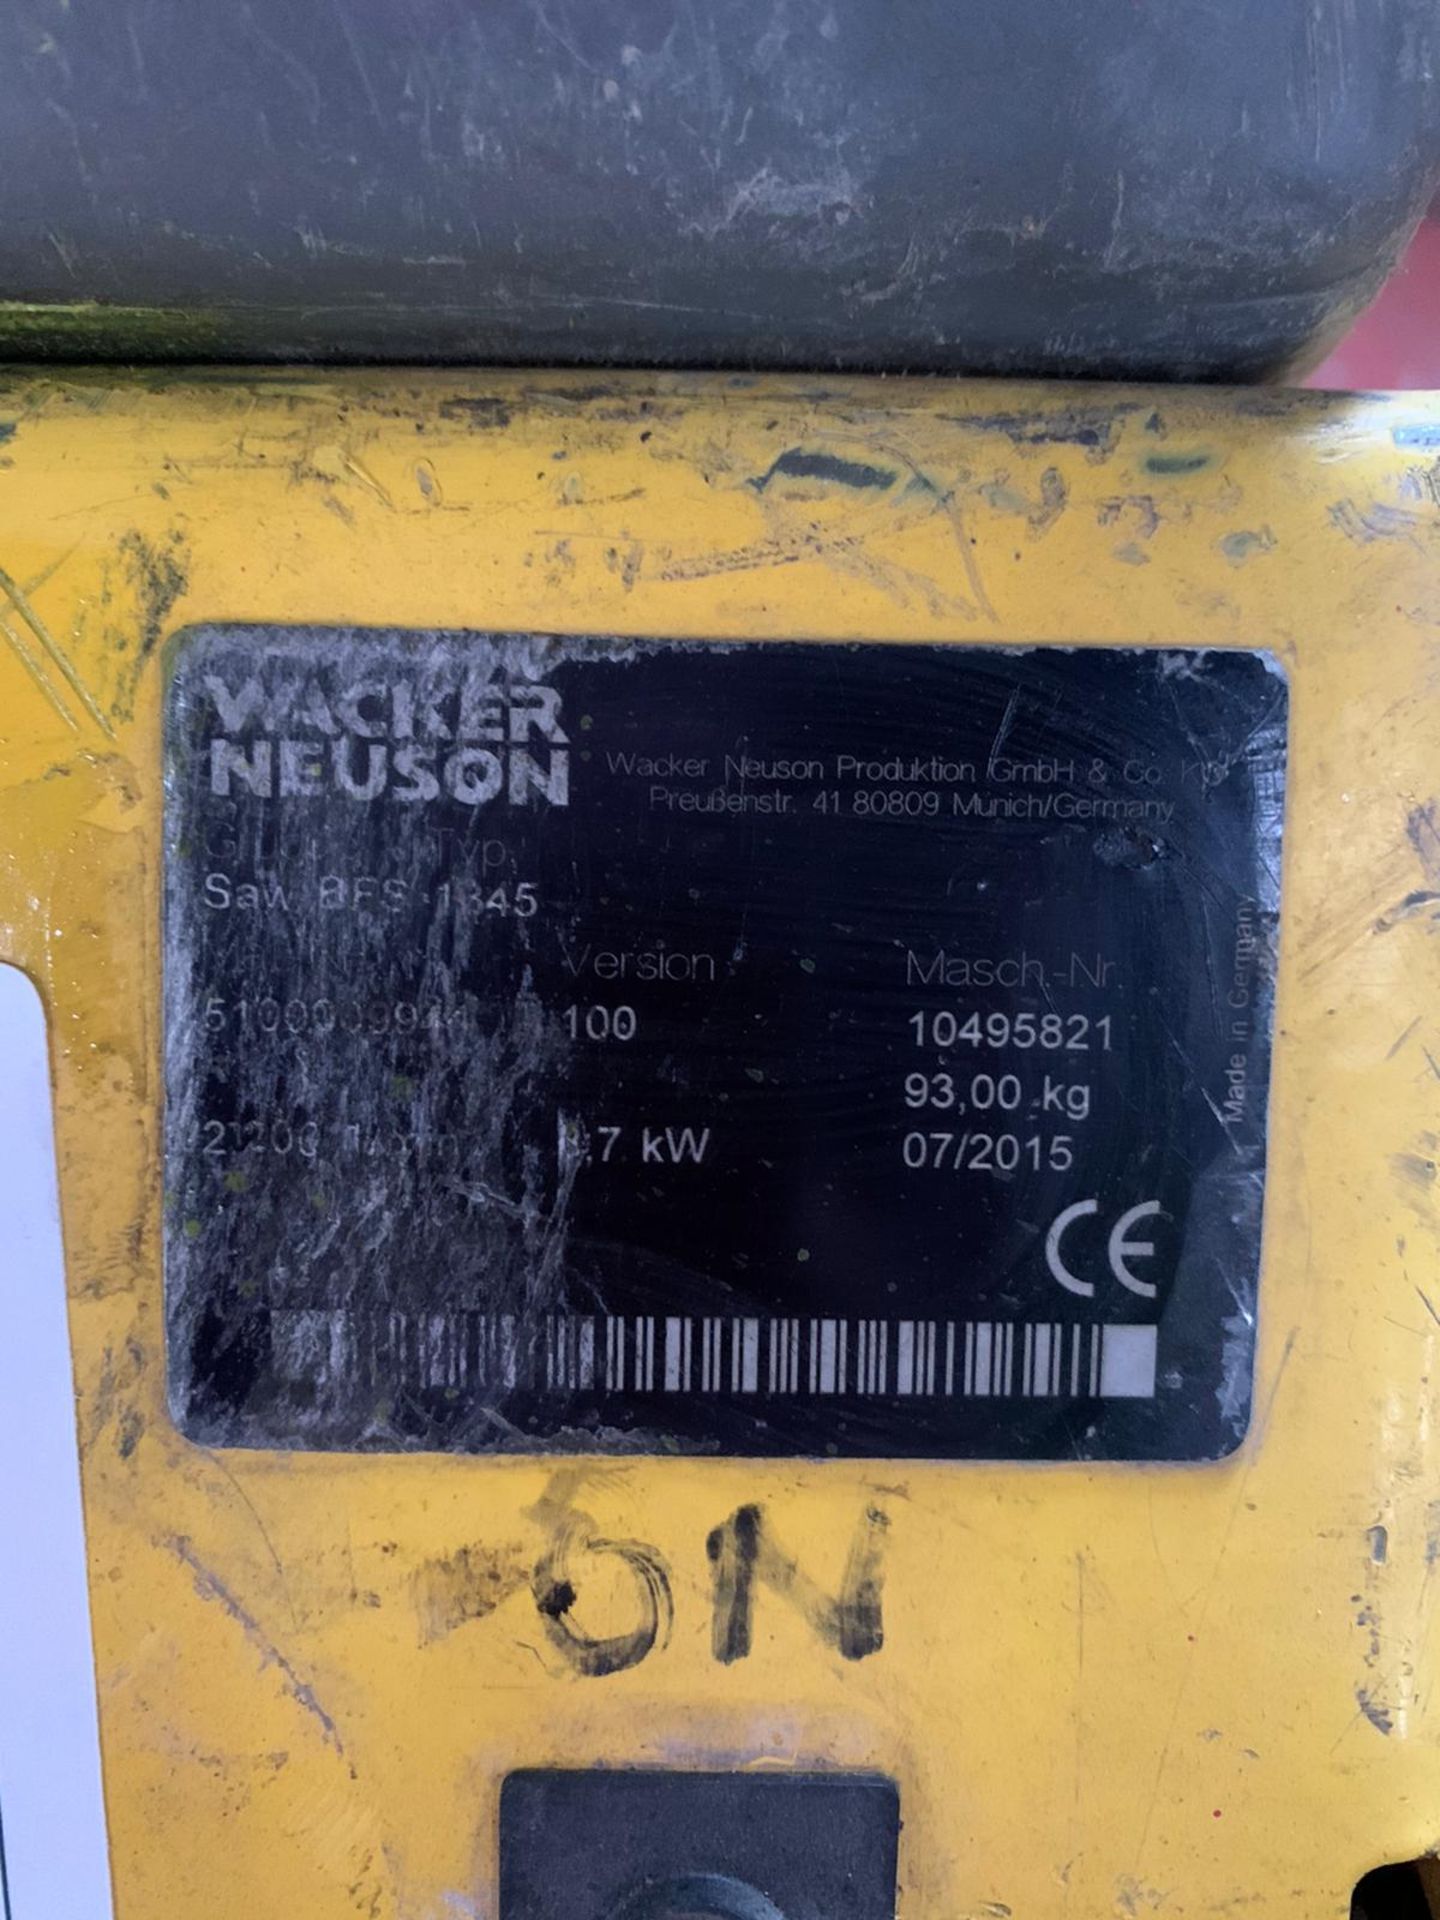 Wacker Neuson BFS1345 450mm Floor Saw - Image 4 of 6